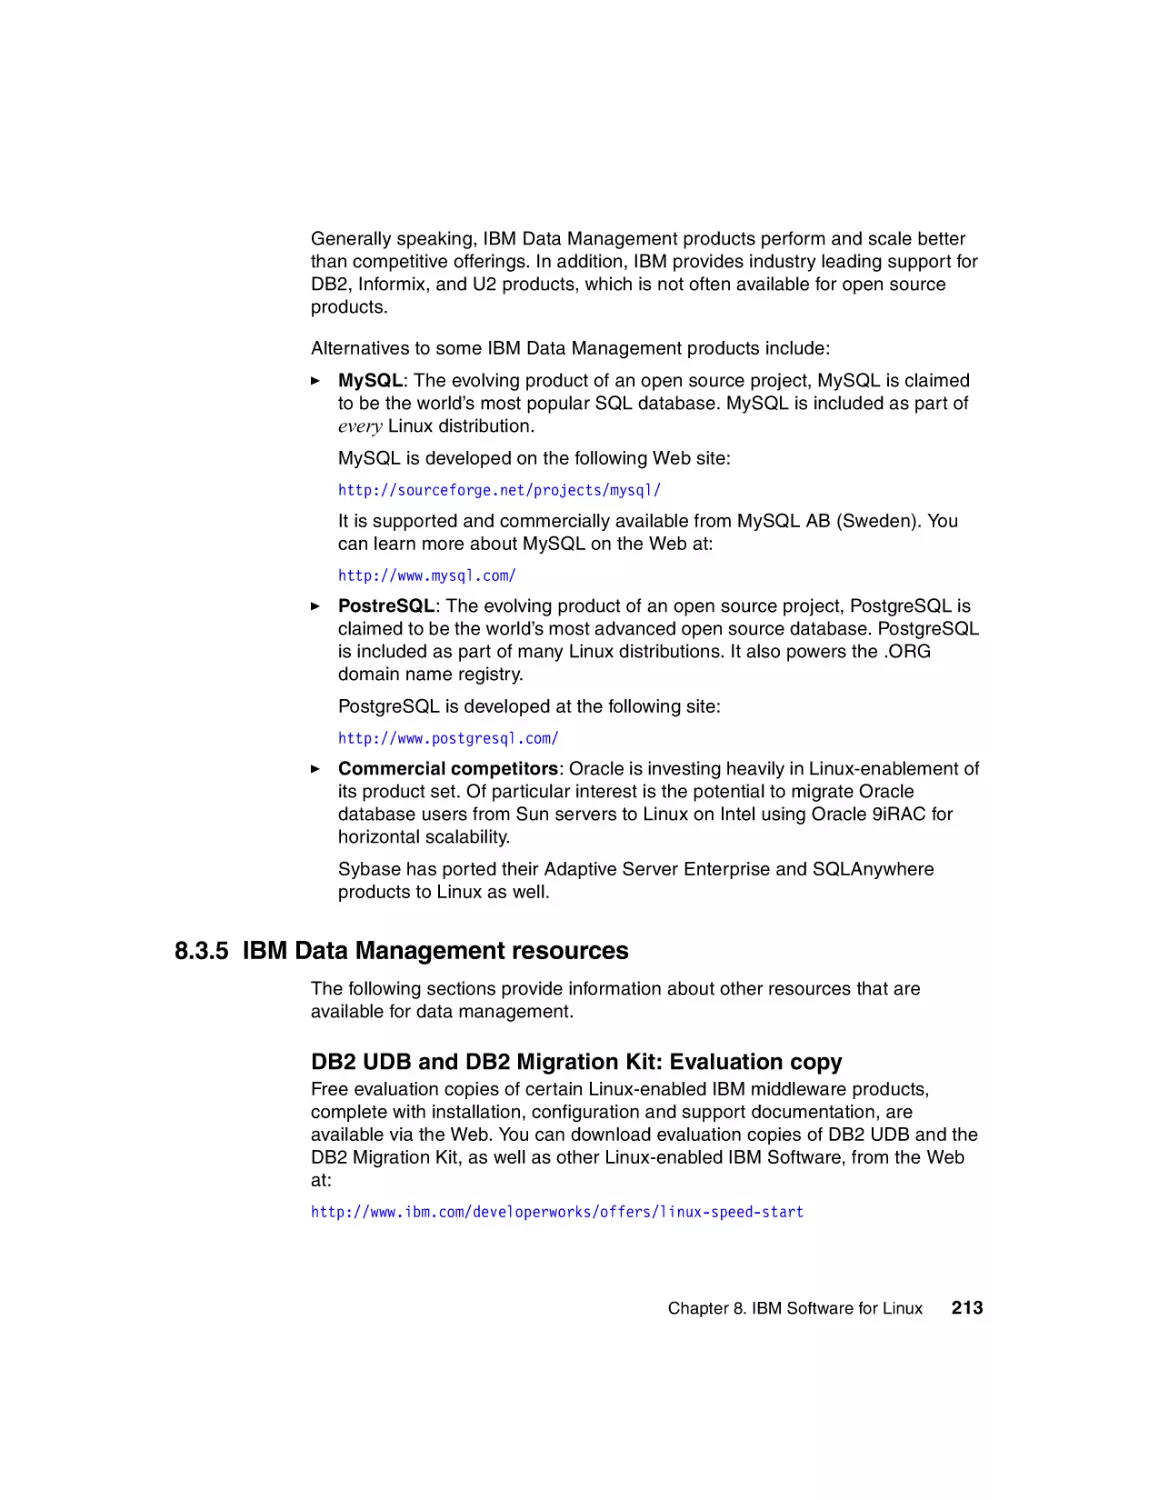 8.3.5 IBM Data Management resources